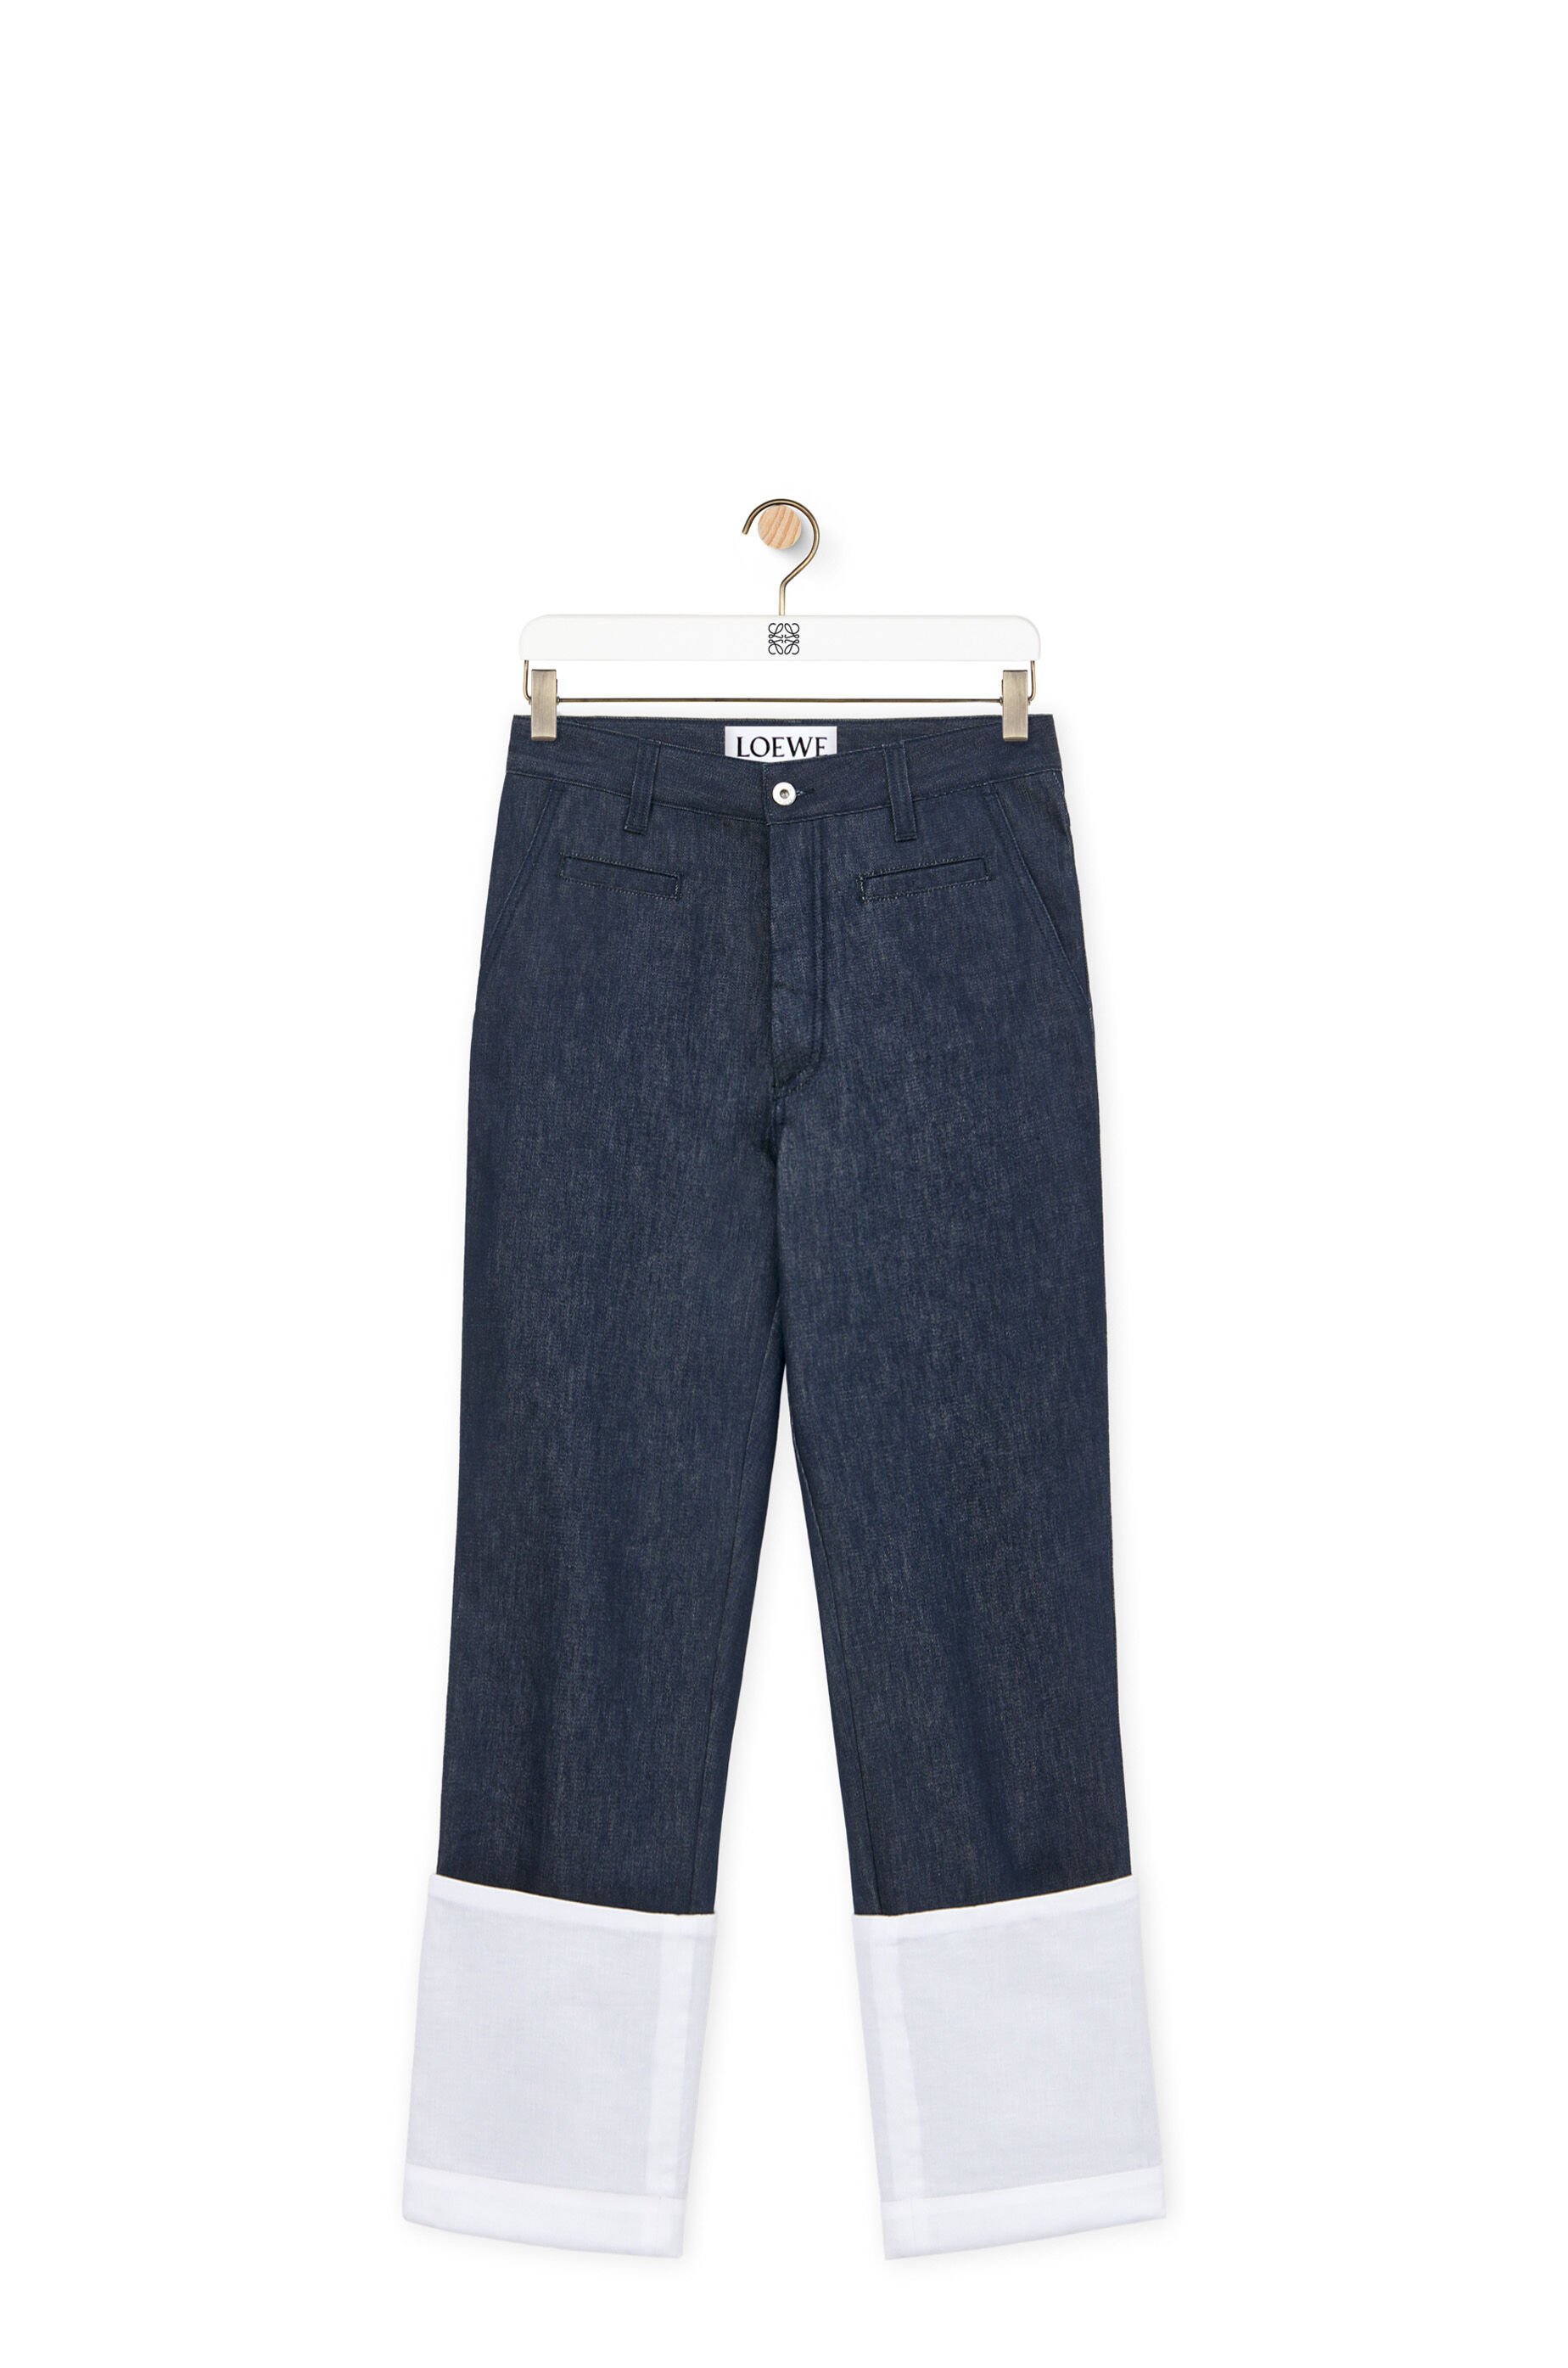 Loewe, Fisherman Cropped Jeans